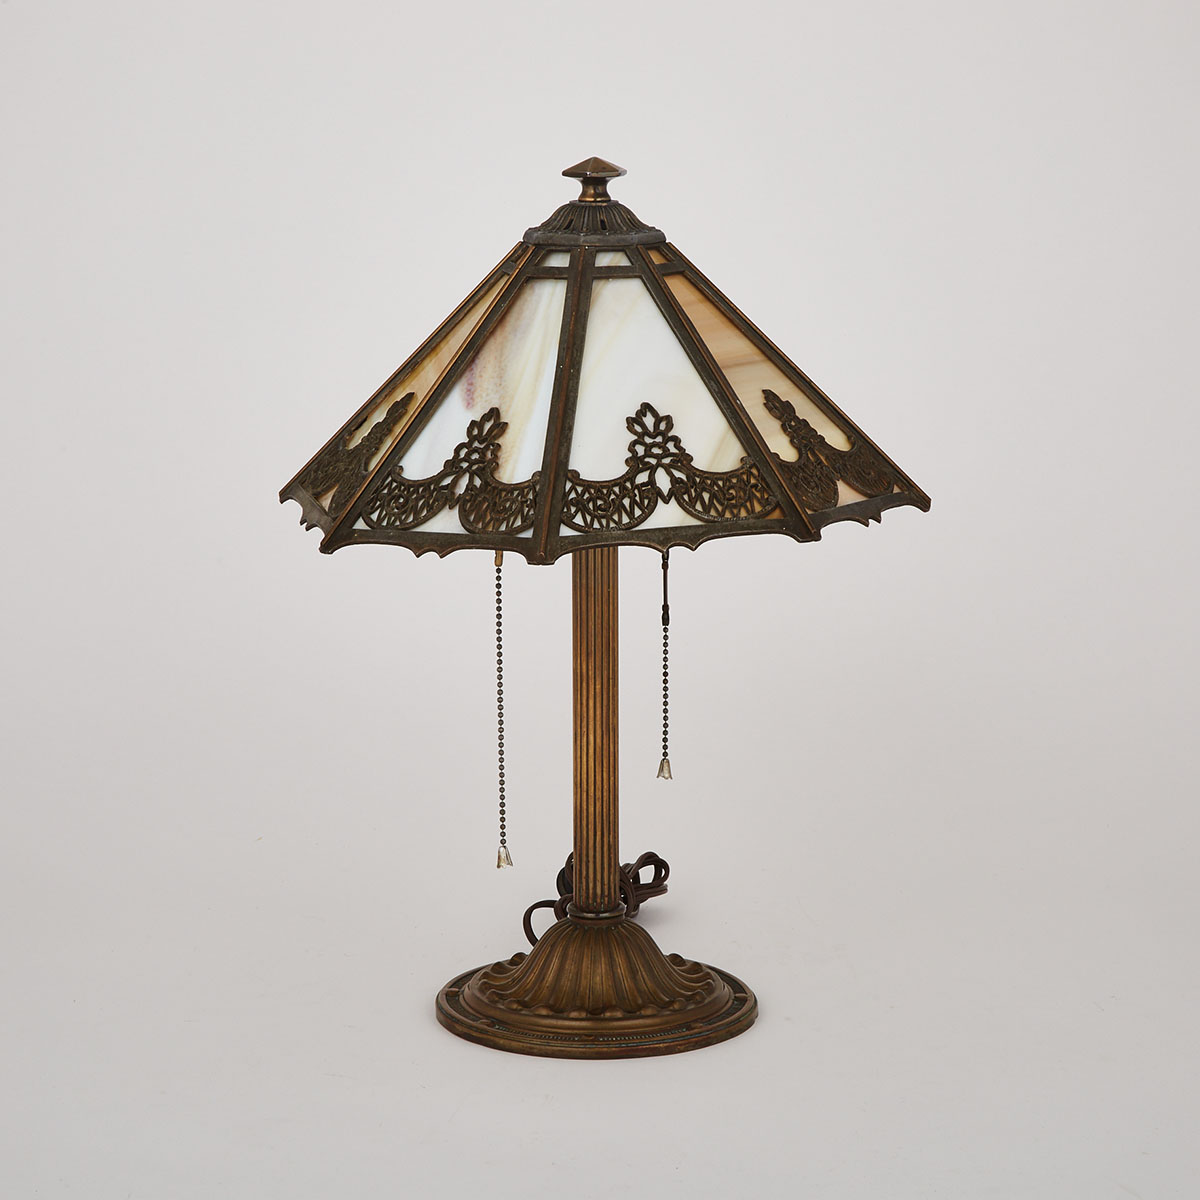 Bradley & Hubbard Slag Glass Desk Lamp, c.1900